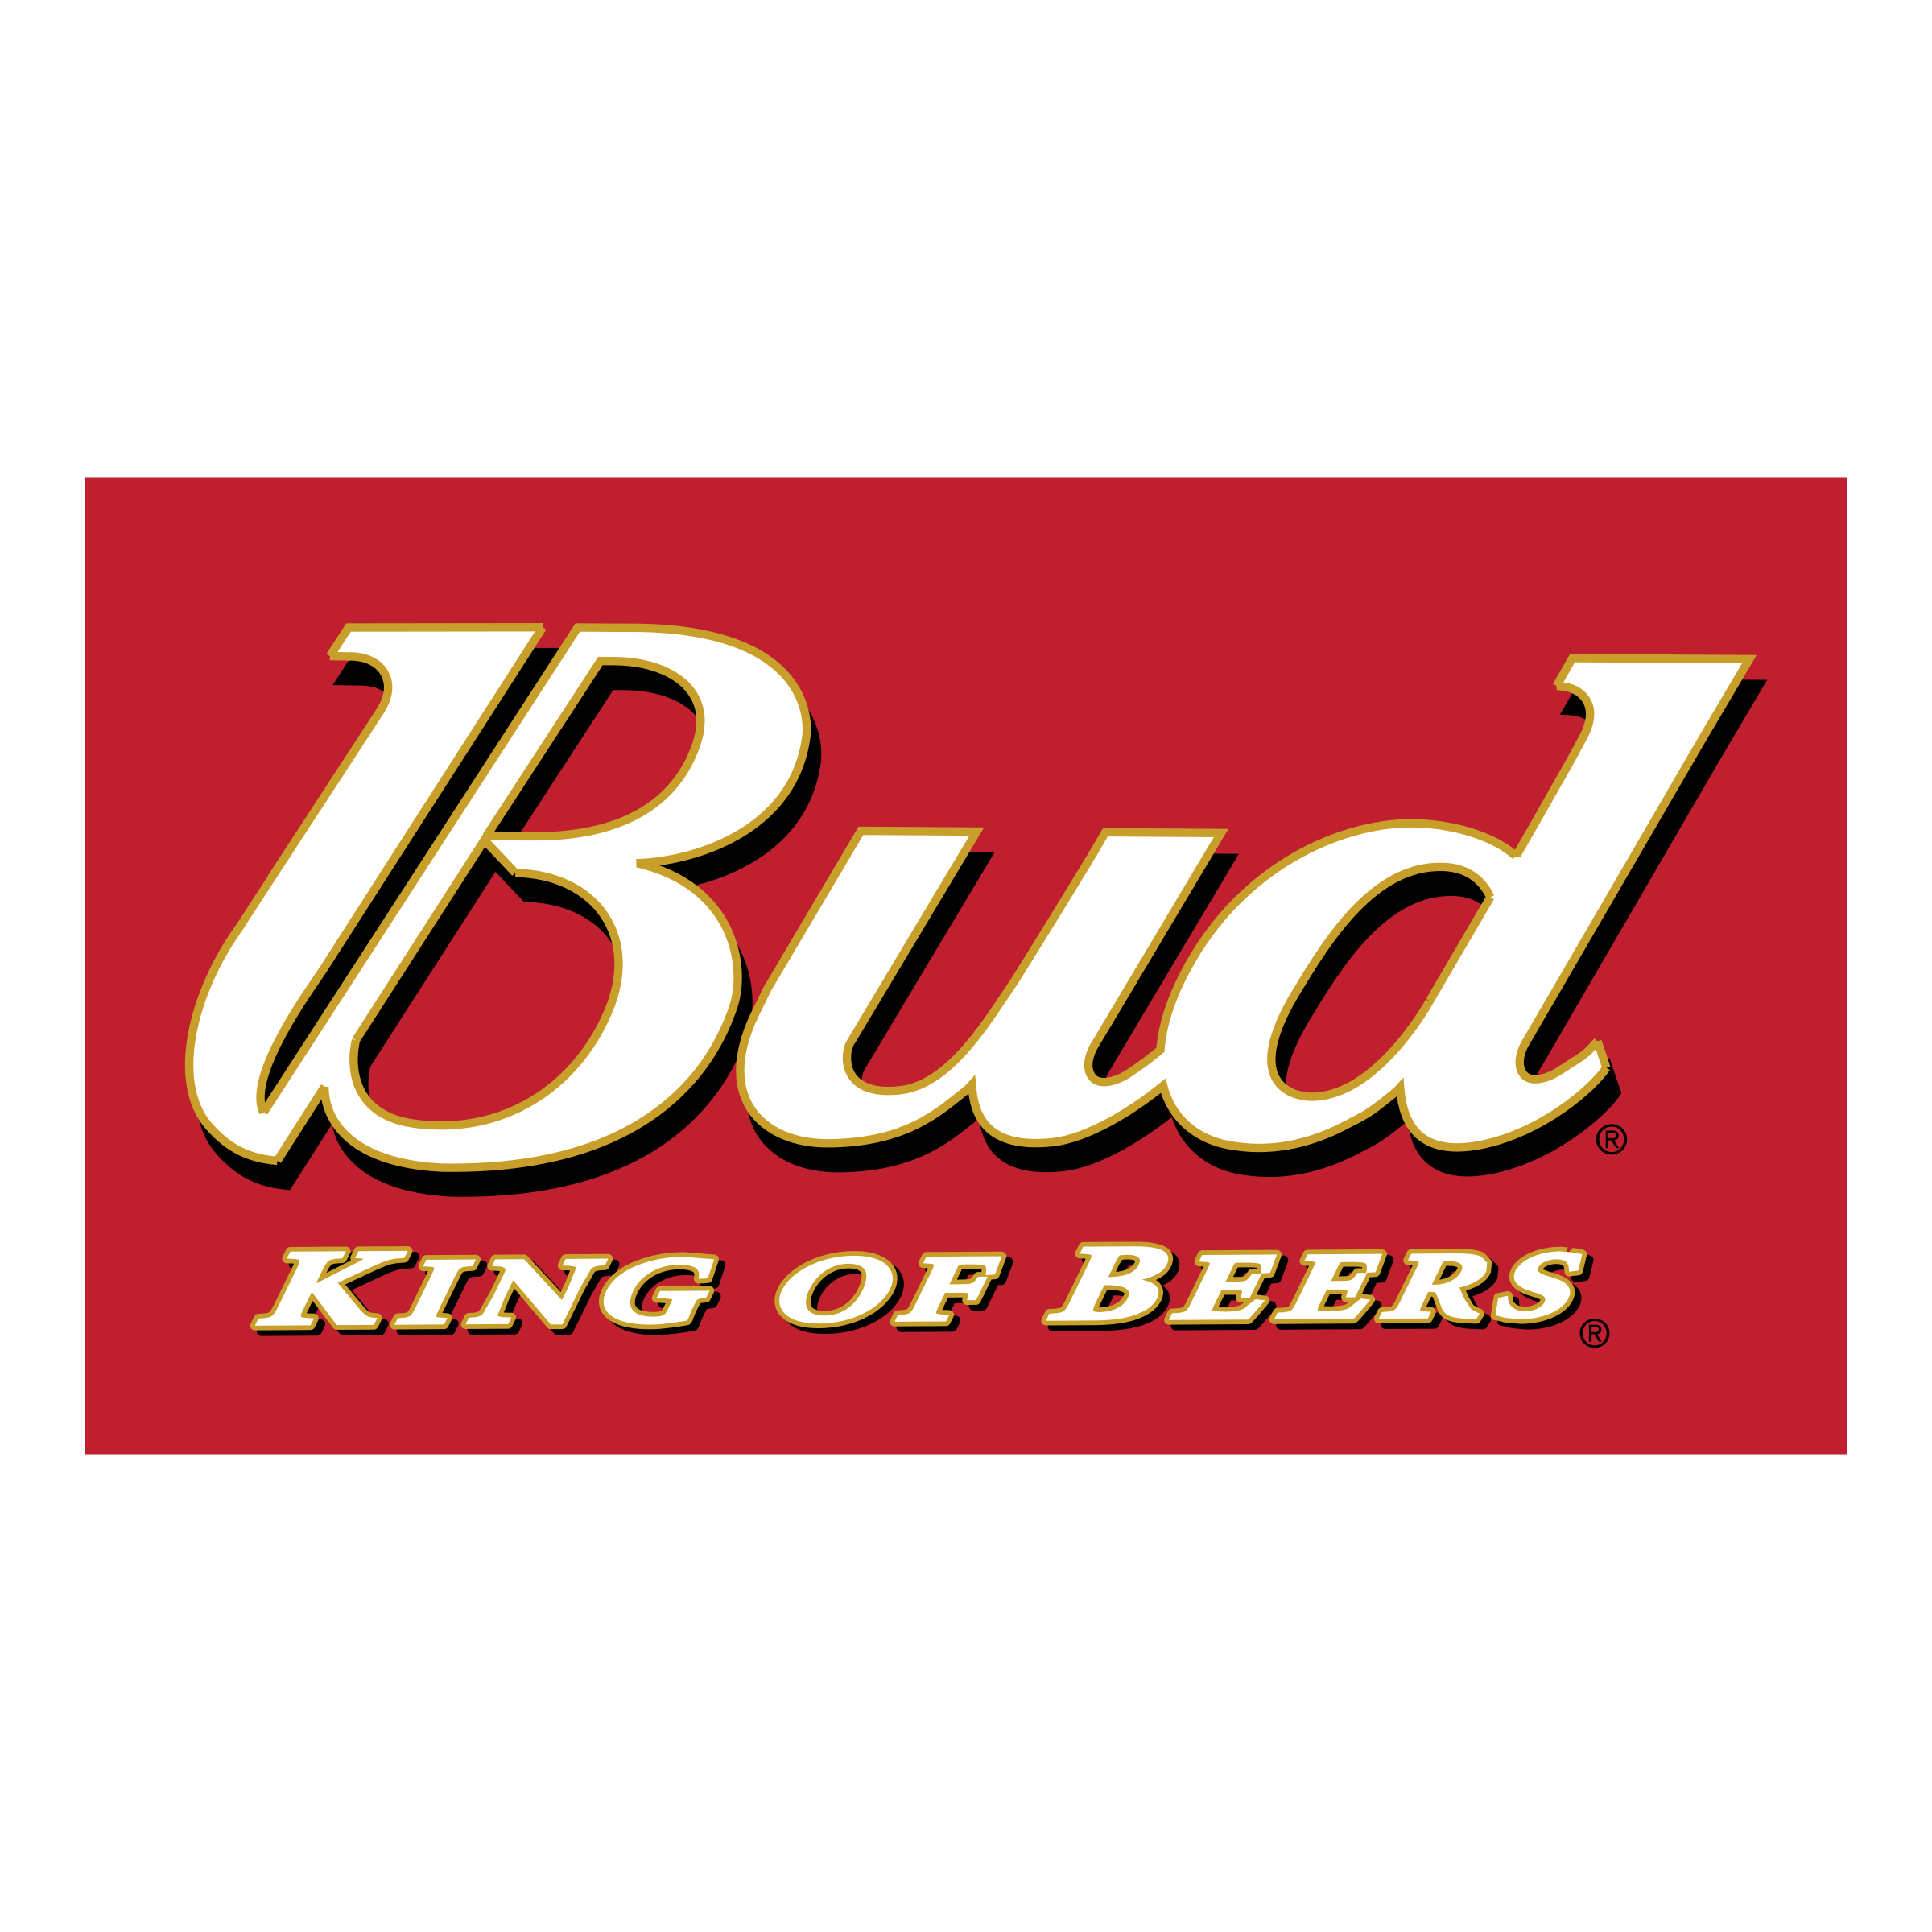 Beers Logo - Bud Logo PNG Transparent & SVG Vector - Freebie Supply